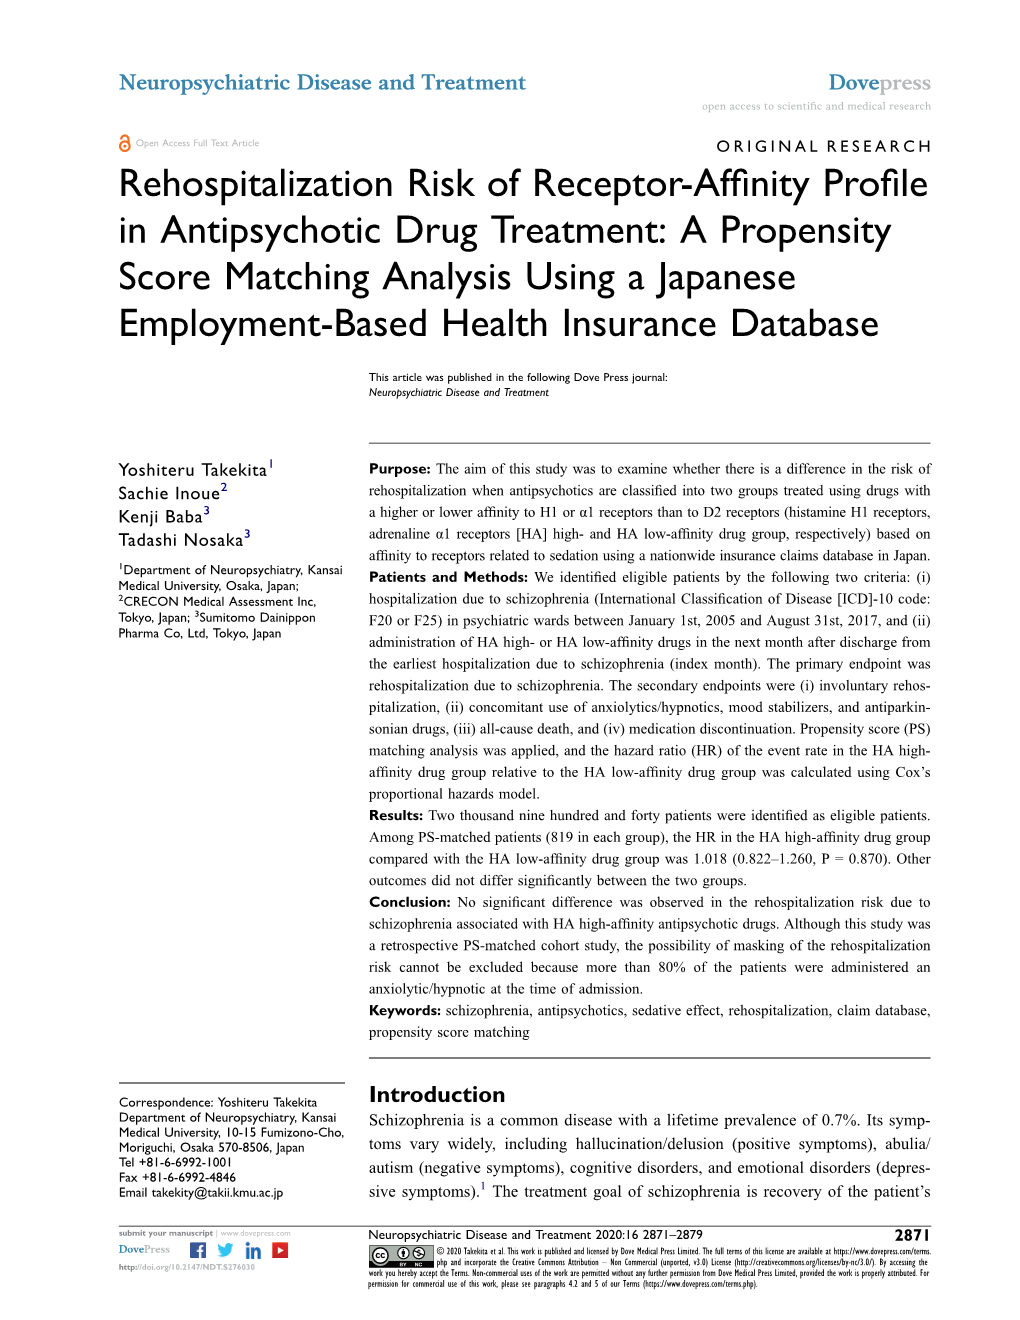 Rehospitalization Risk of Receptor-Affinity Profile in Antipsychotic Drug Treatment